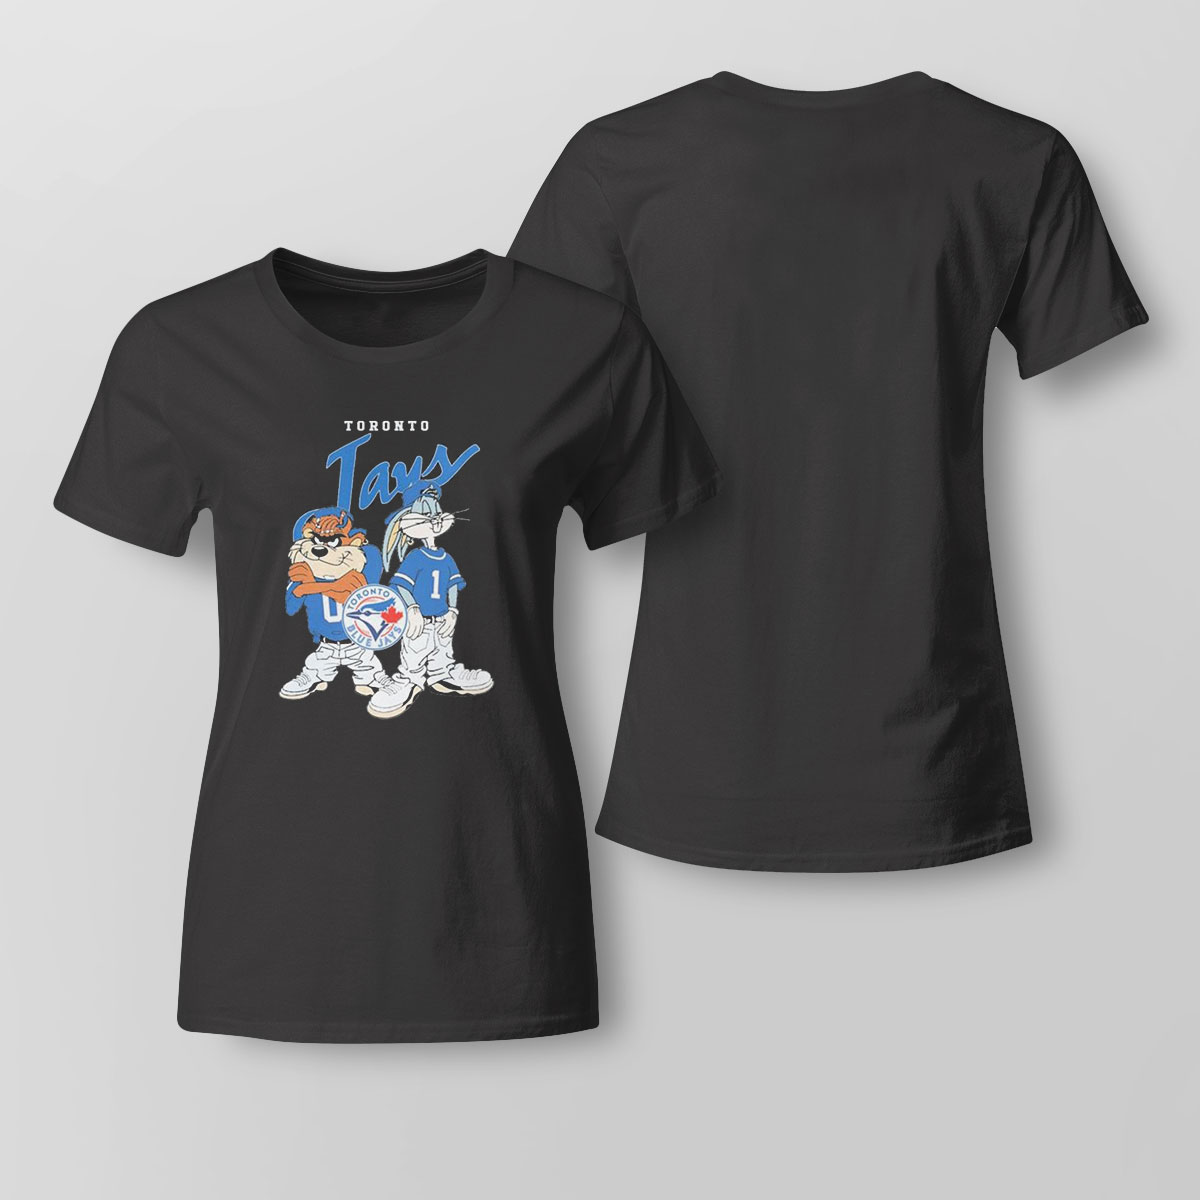 Looney Tunes Toronto Blue Jays T-shirt